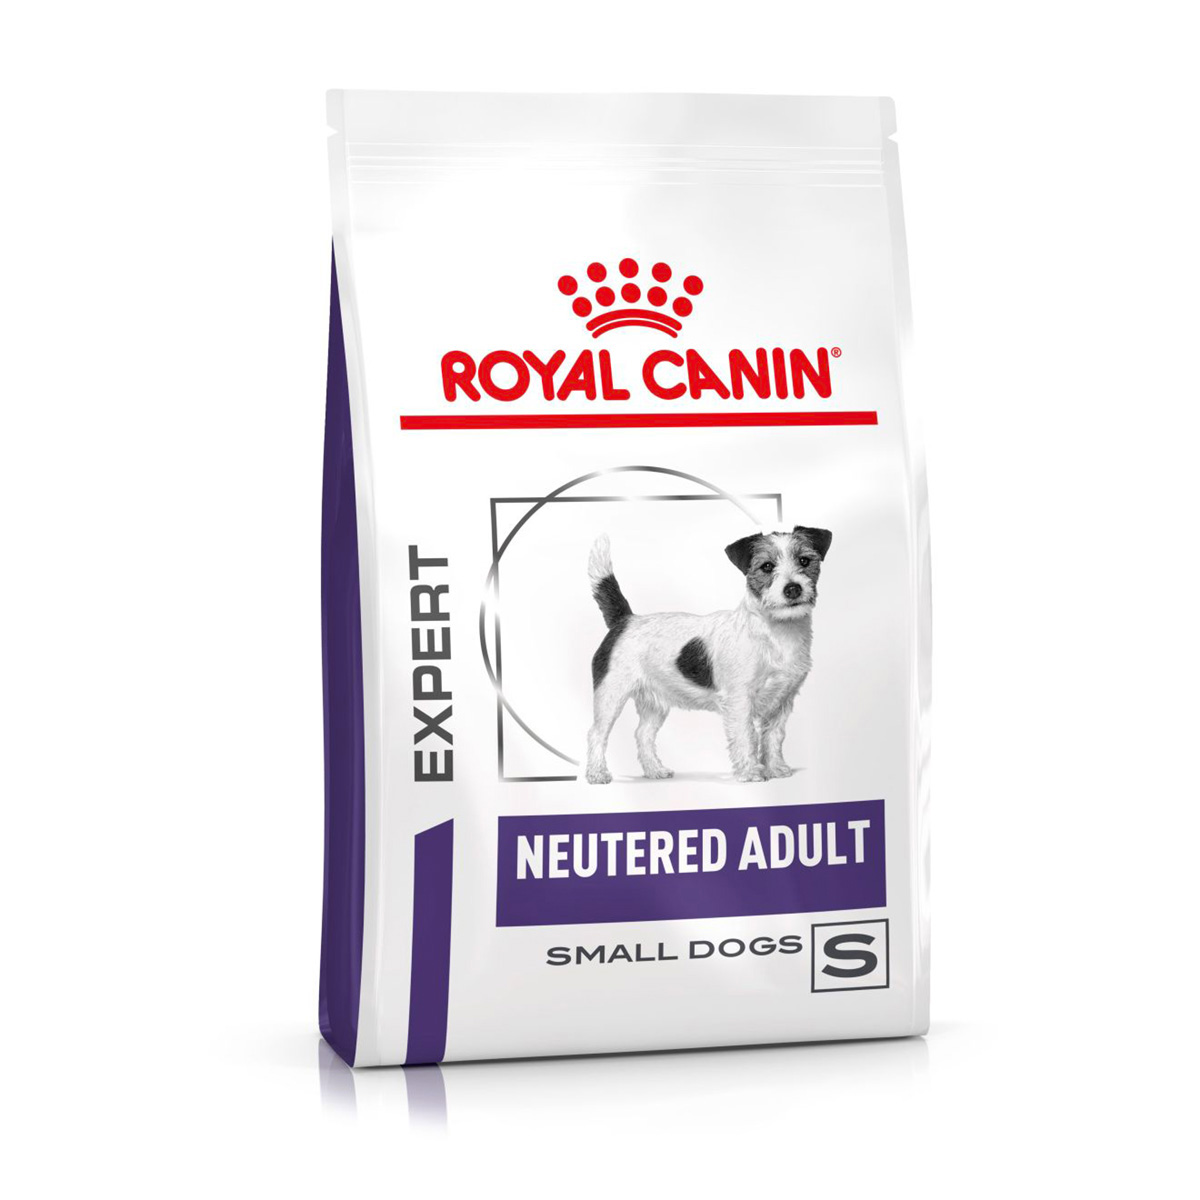 ROYAL CANIN® Expert NEUTERED ADULT SMALL DOGS Trockenfutter für Hunde 3,5 kg